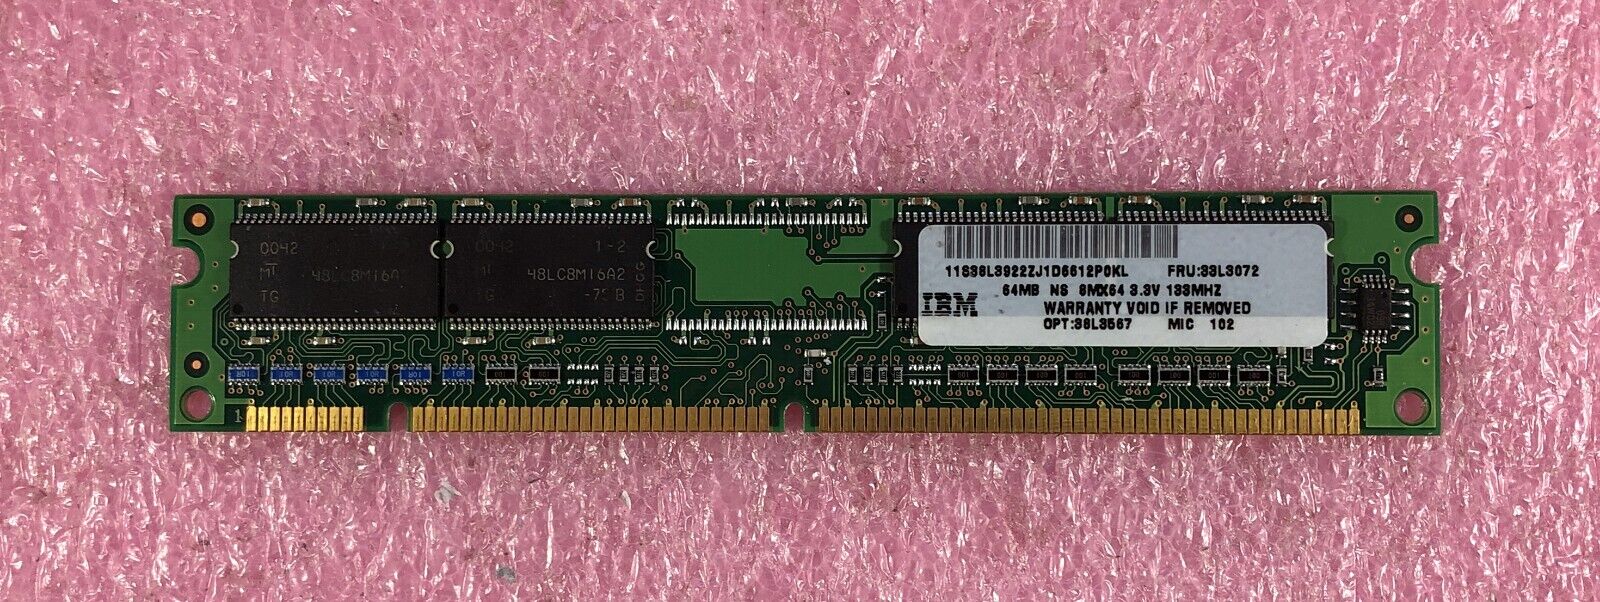 1 x 64MB IBM  PC-133 NON-ECC MEMORY SDRAM - FRU: 33L3072